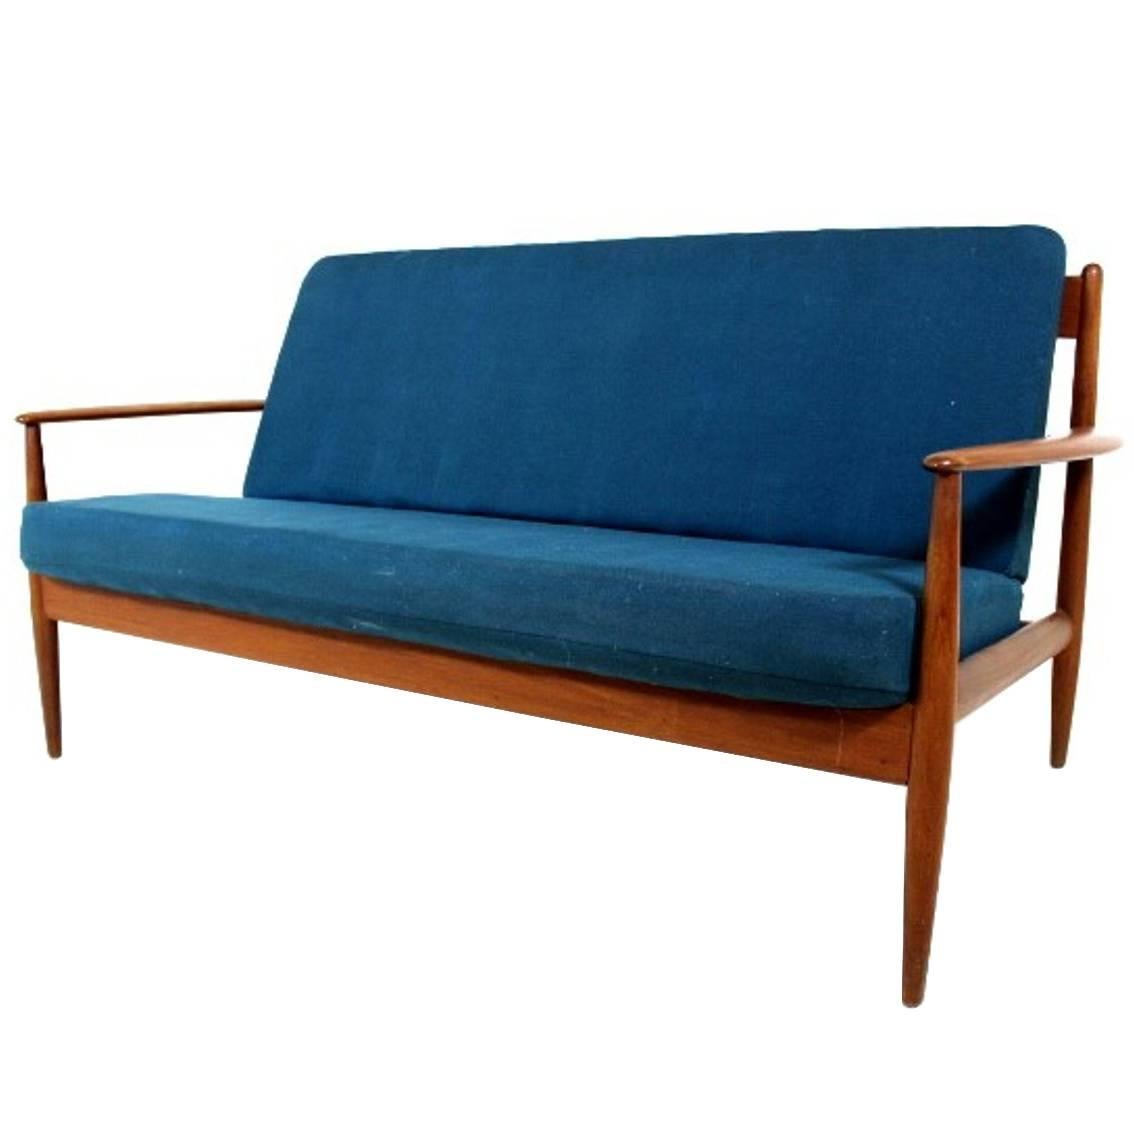 Vintage Teak Framed Two-Seat Sofa Designed by Grete Jalk for France & Daverkosen